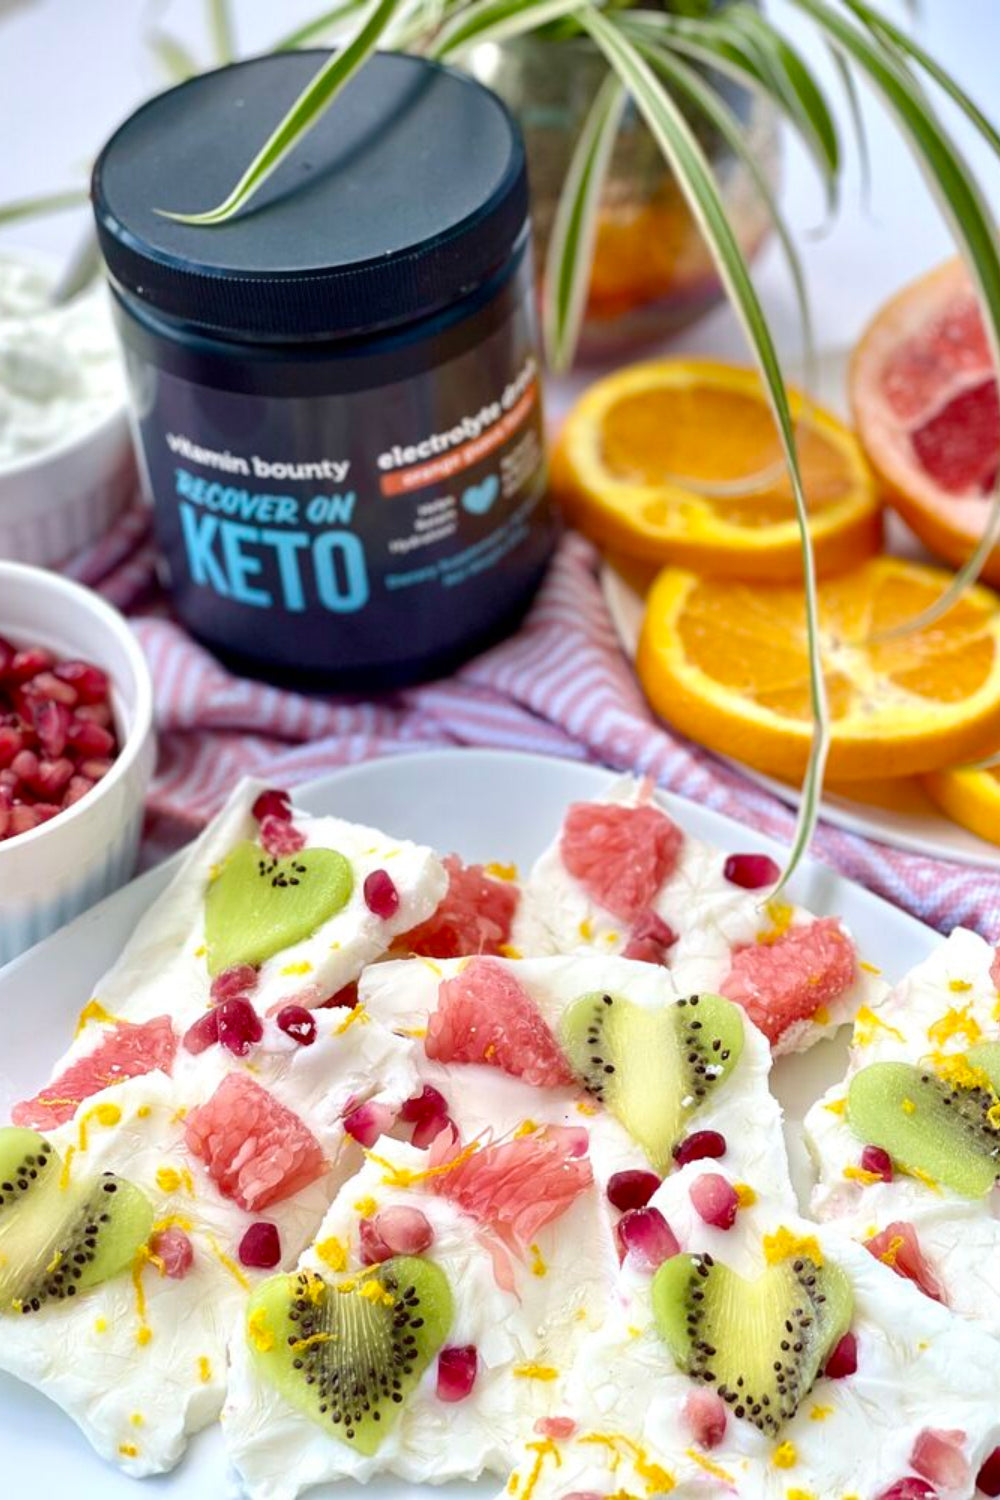 Frozen Yogurt Bark using Recover On Keto by Vitamin Bounty